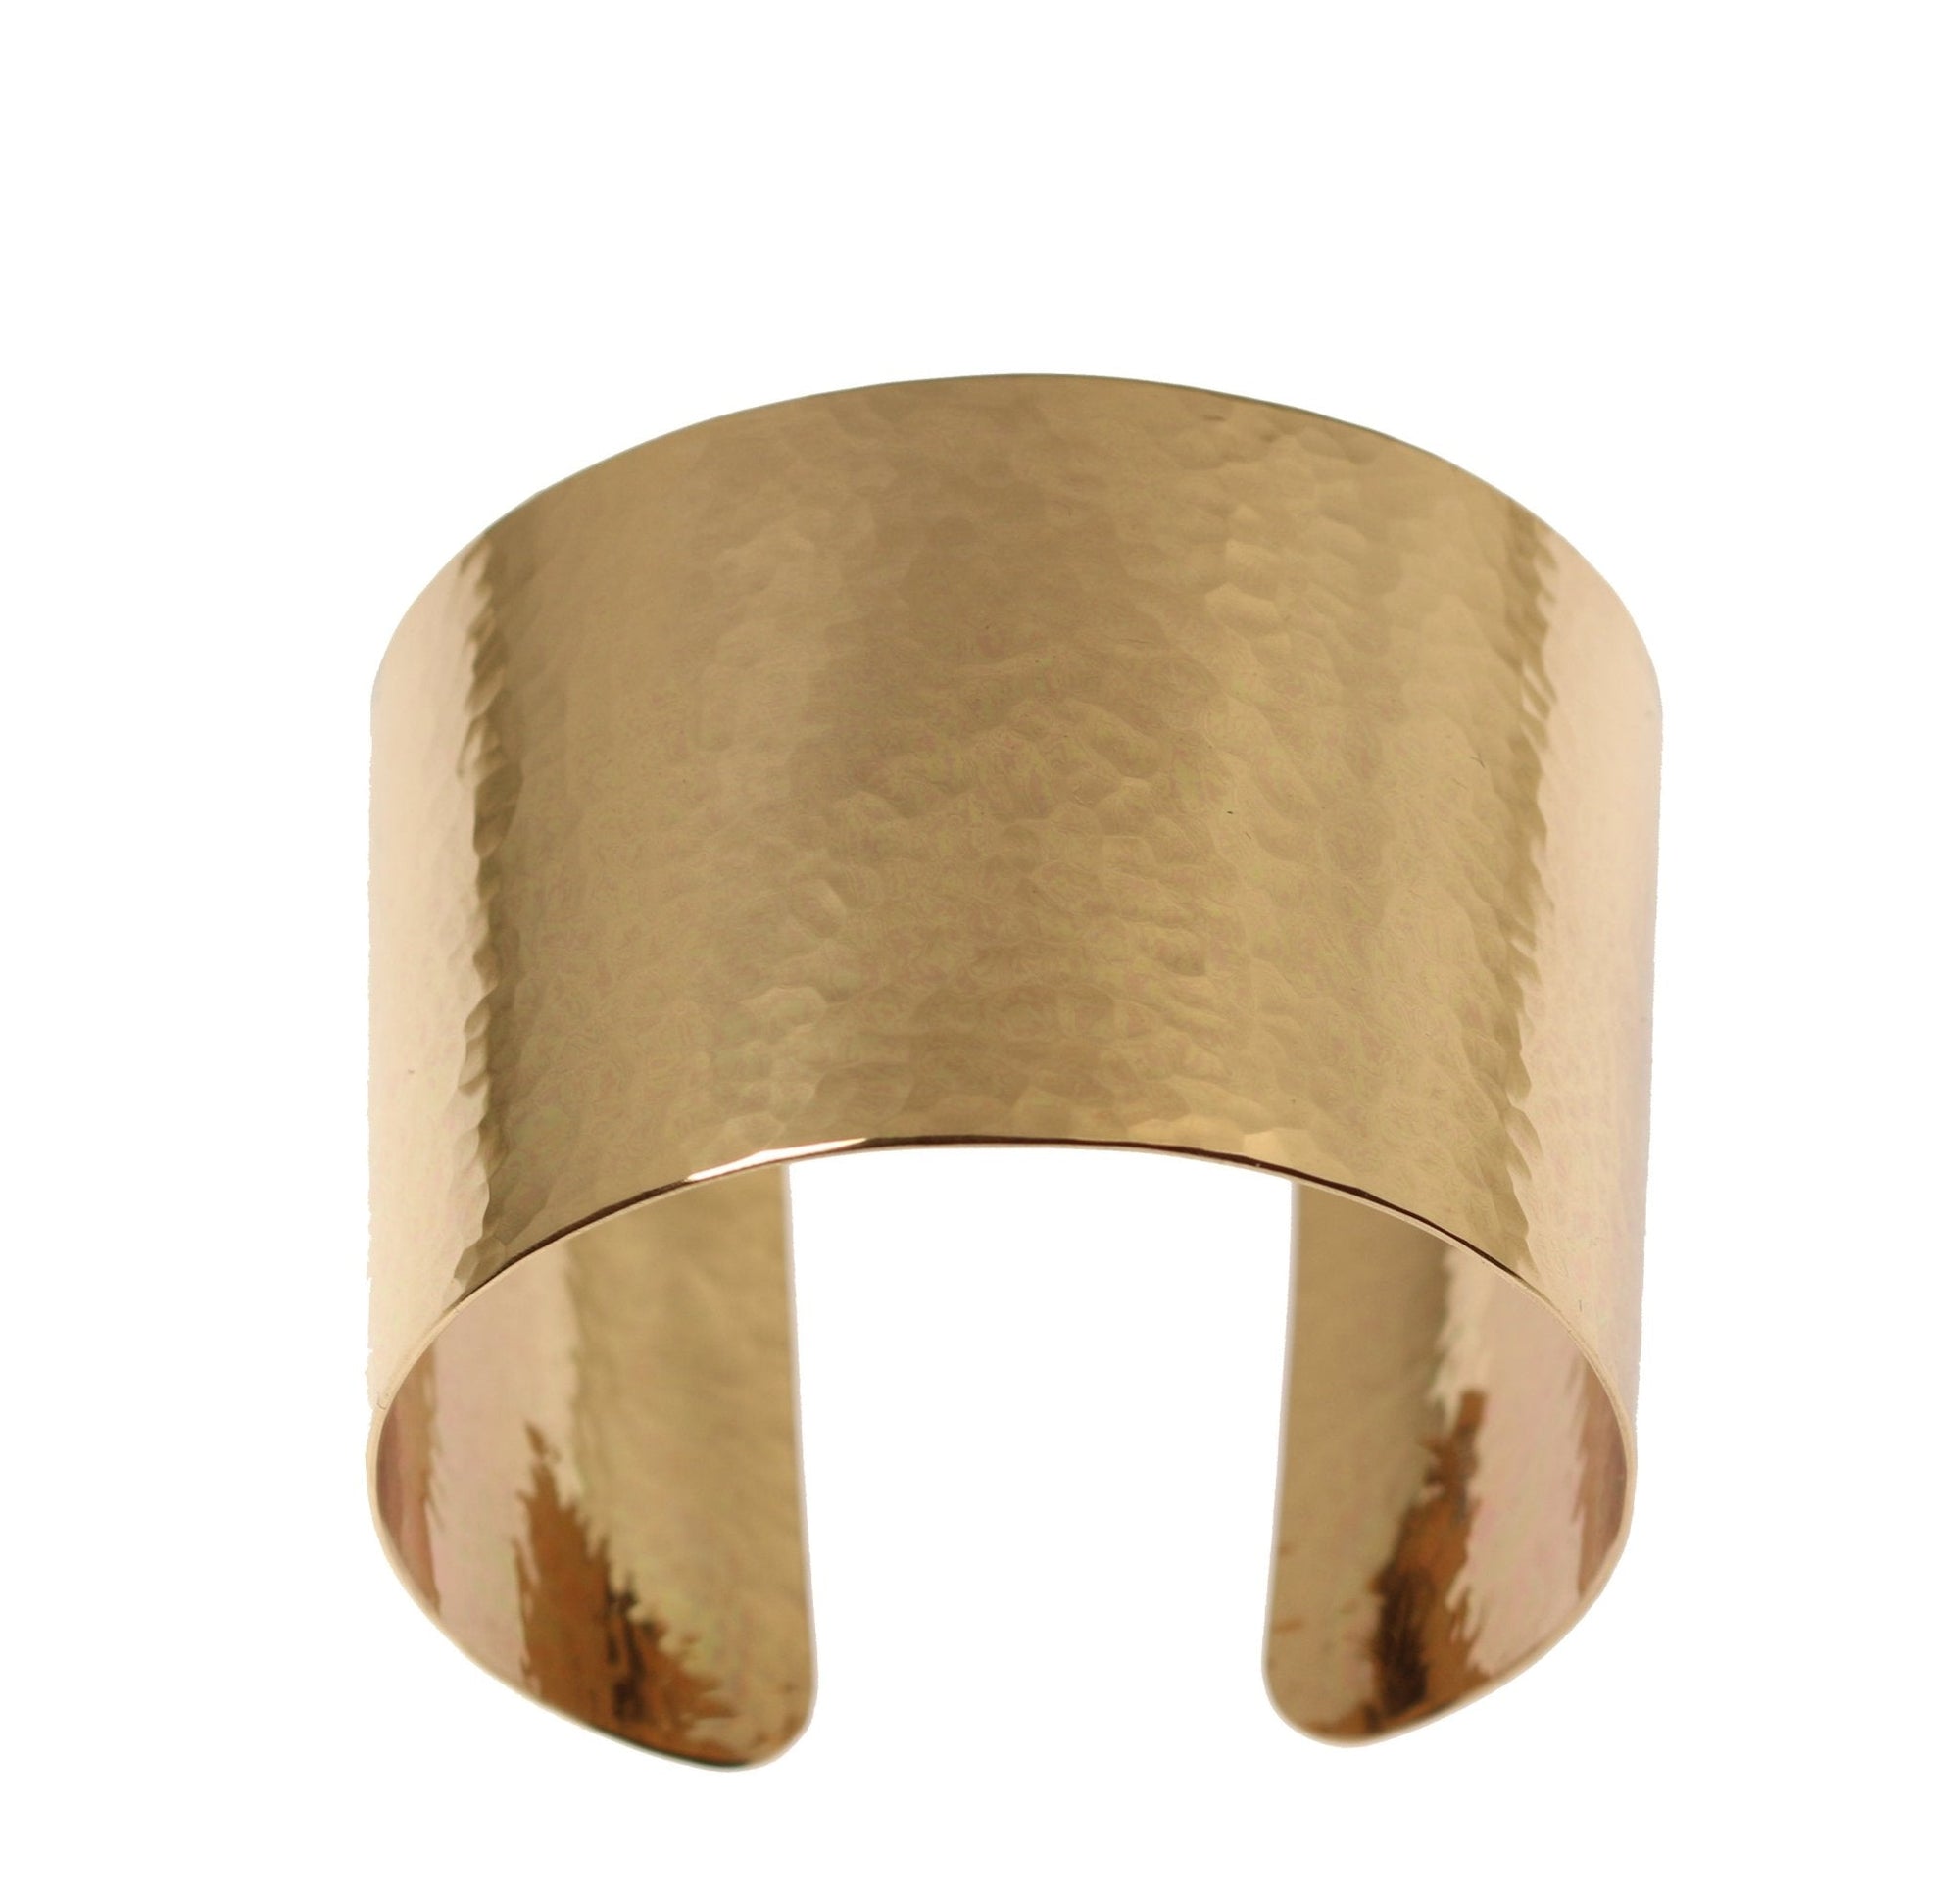 Top View of Hammered Bronze Cuff Bracelet